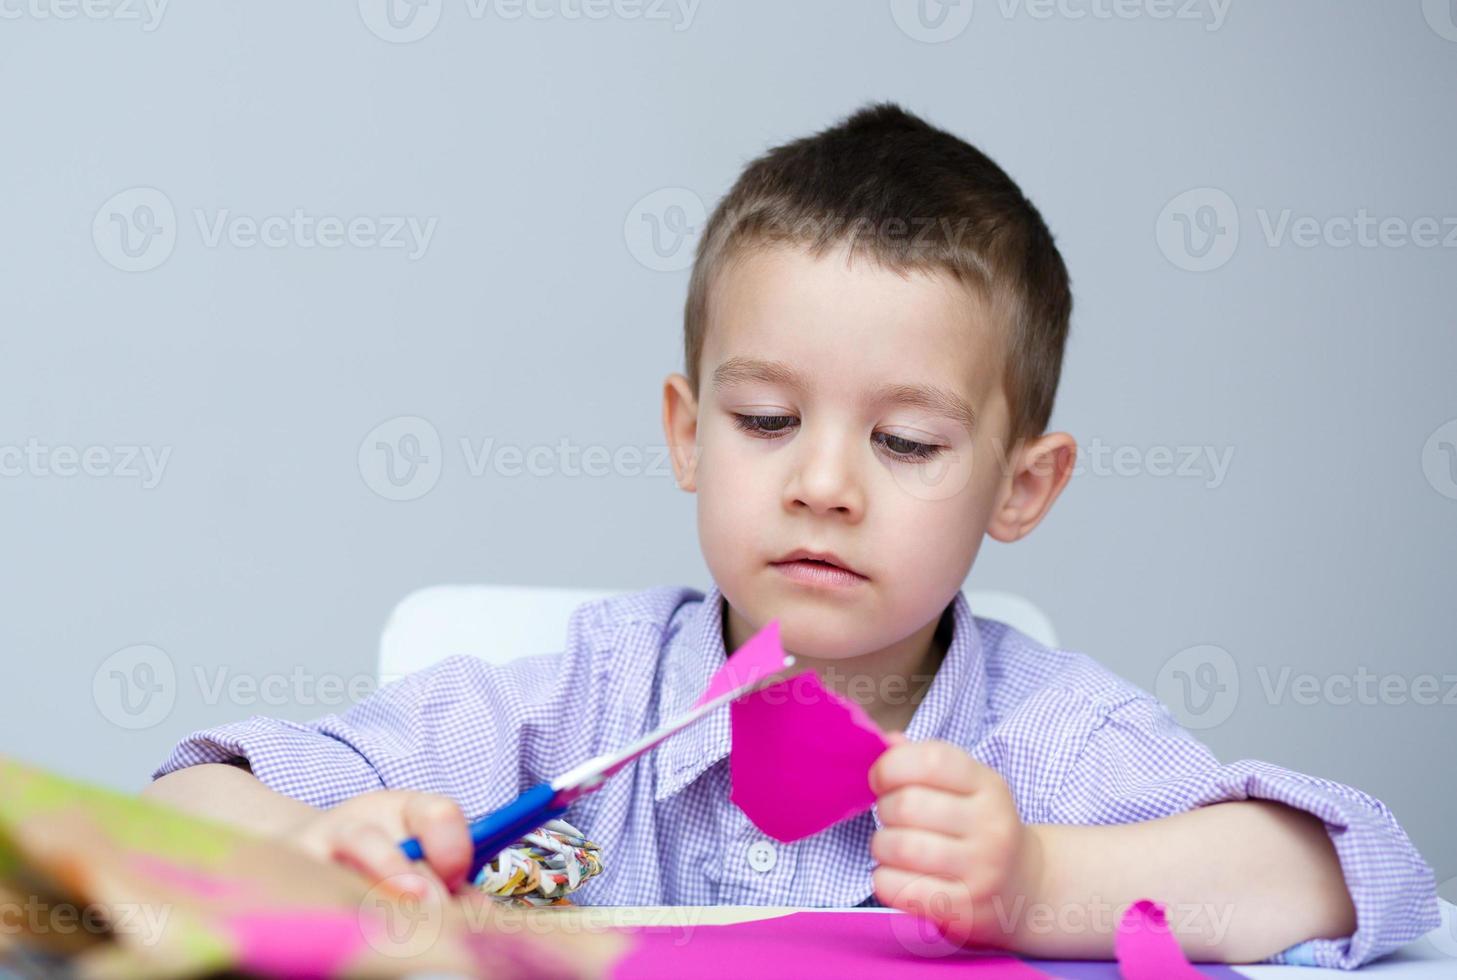 Boy is cutting paper using scissors photo